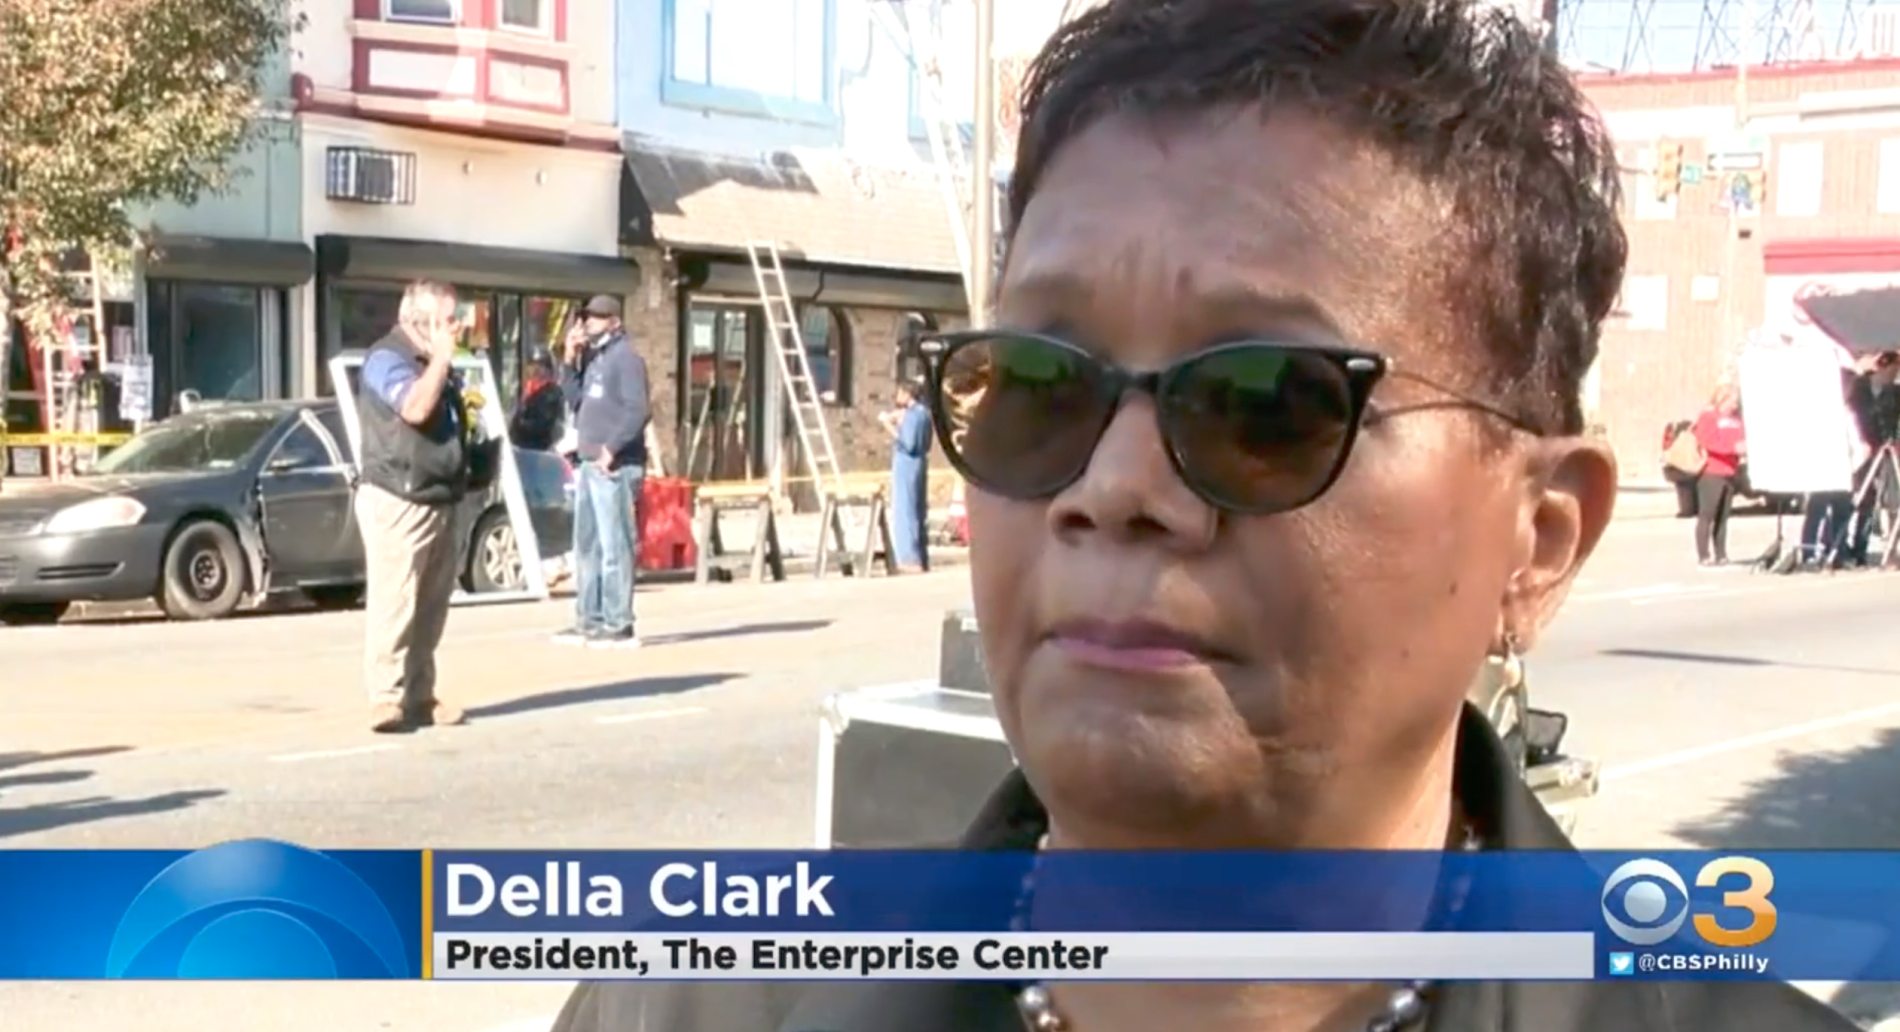 The Enterprise Center President, Della Clark